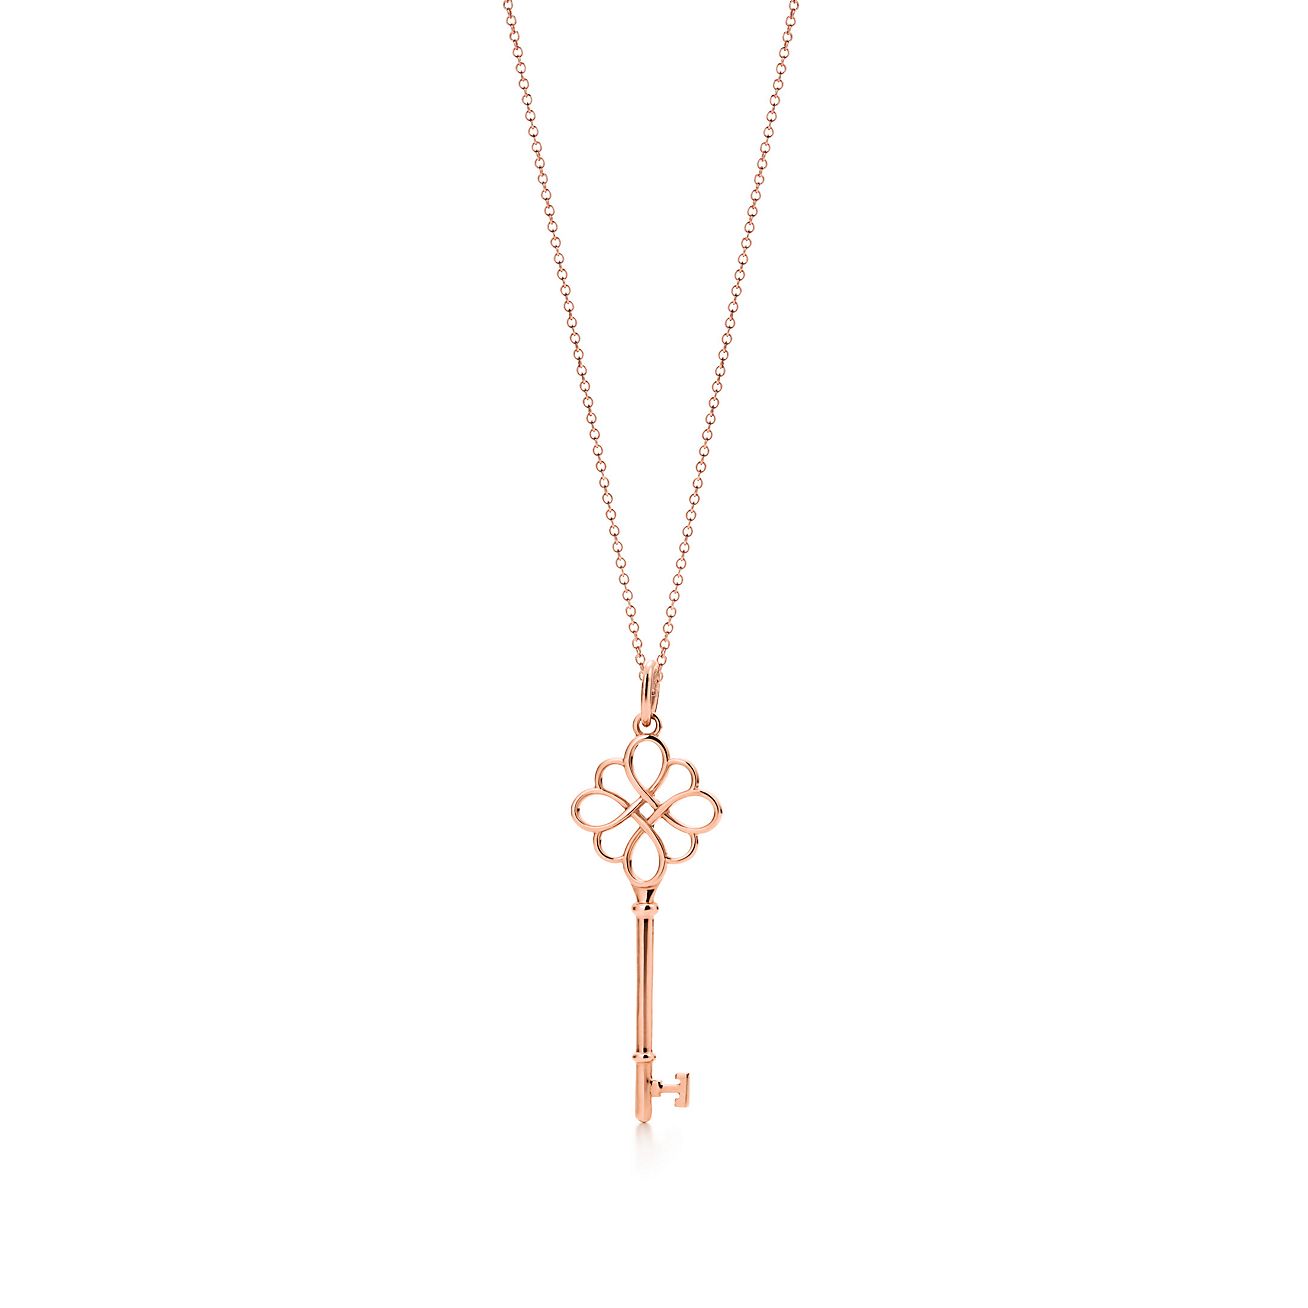 Tiffany Keys knot key pendant in 18k 